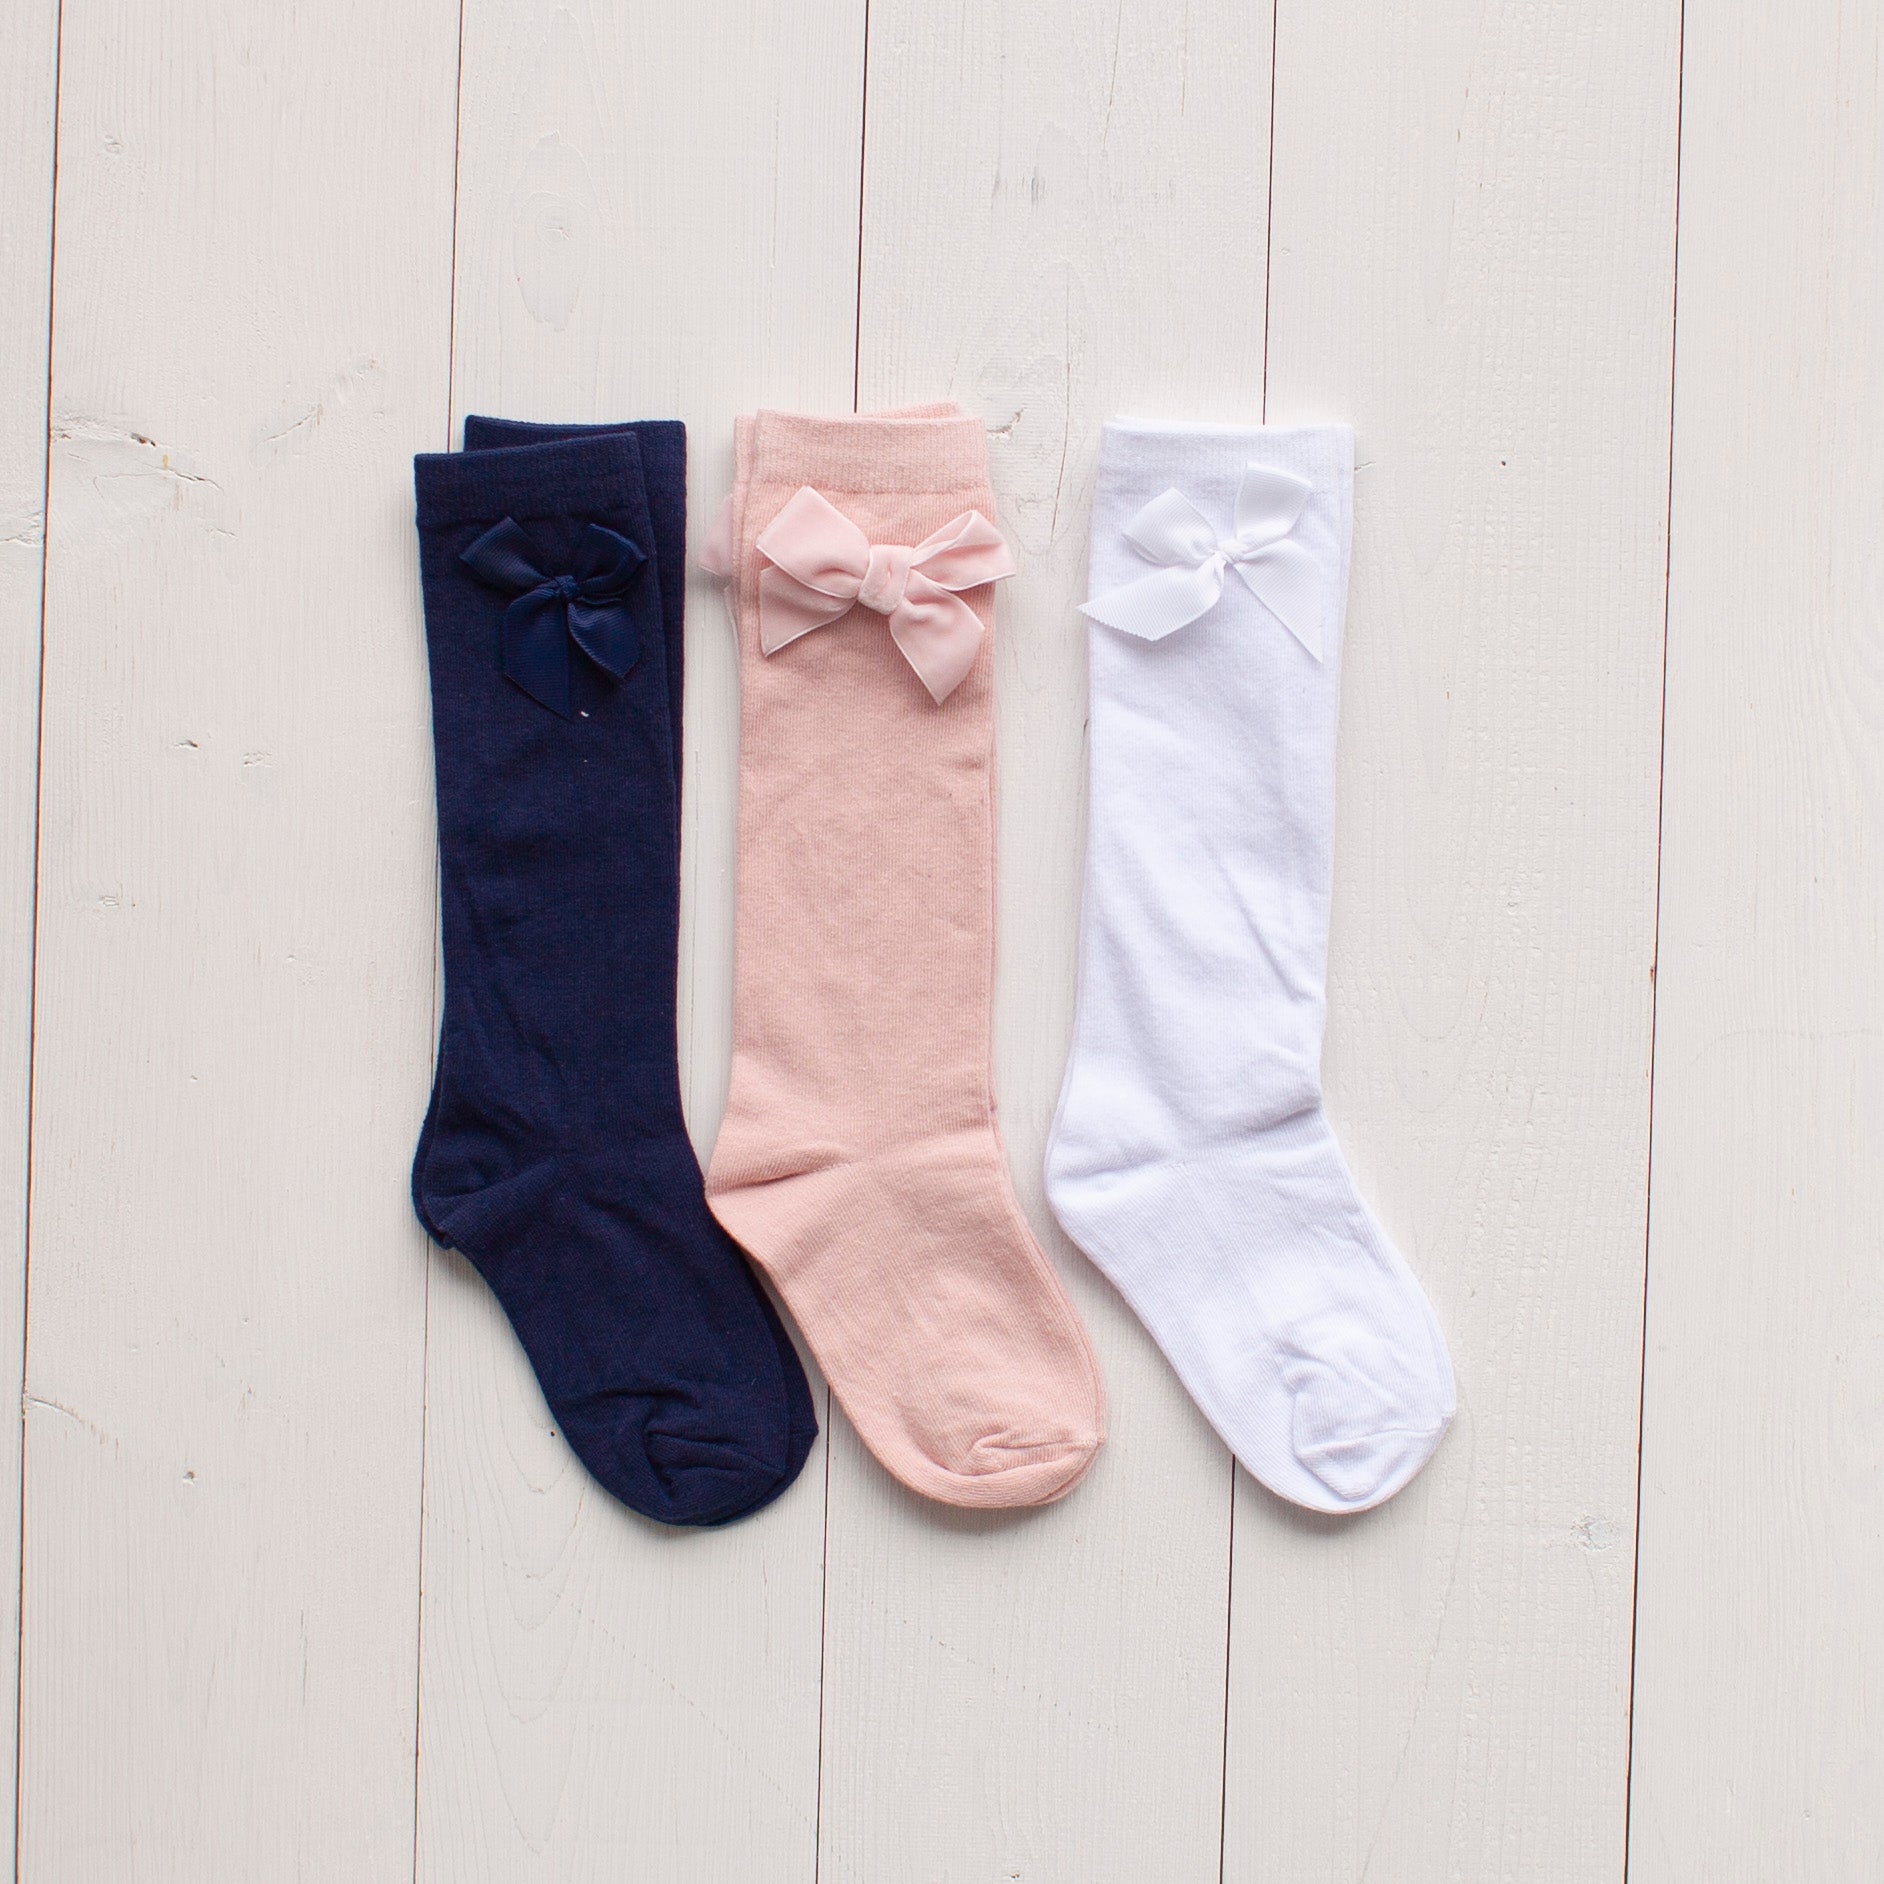 three pairs of socks